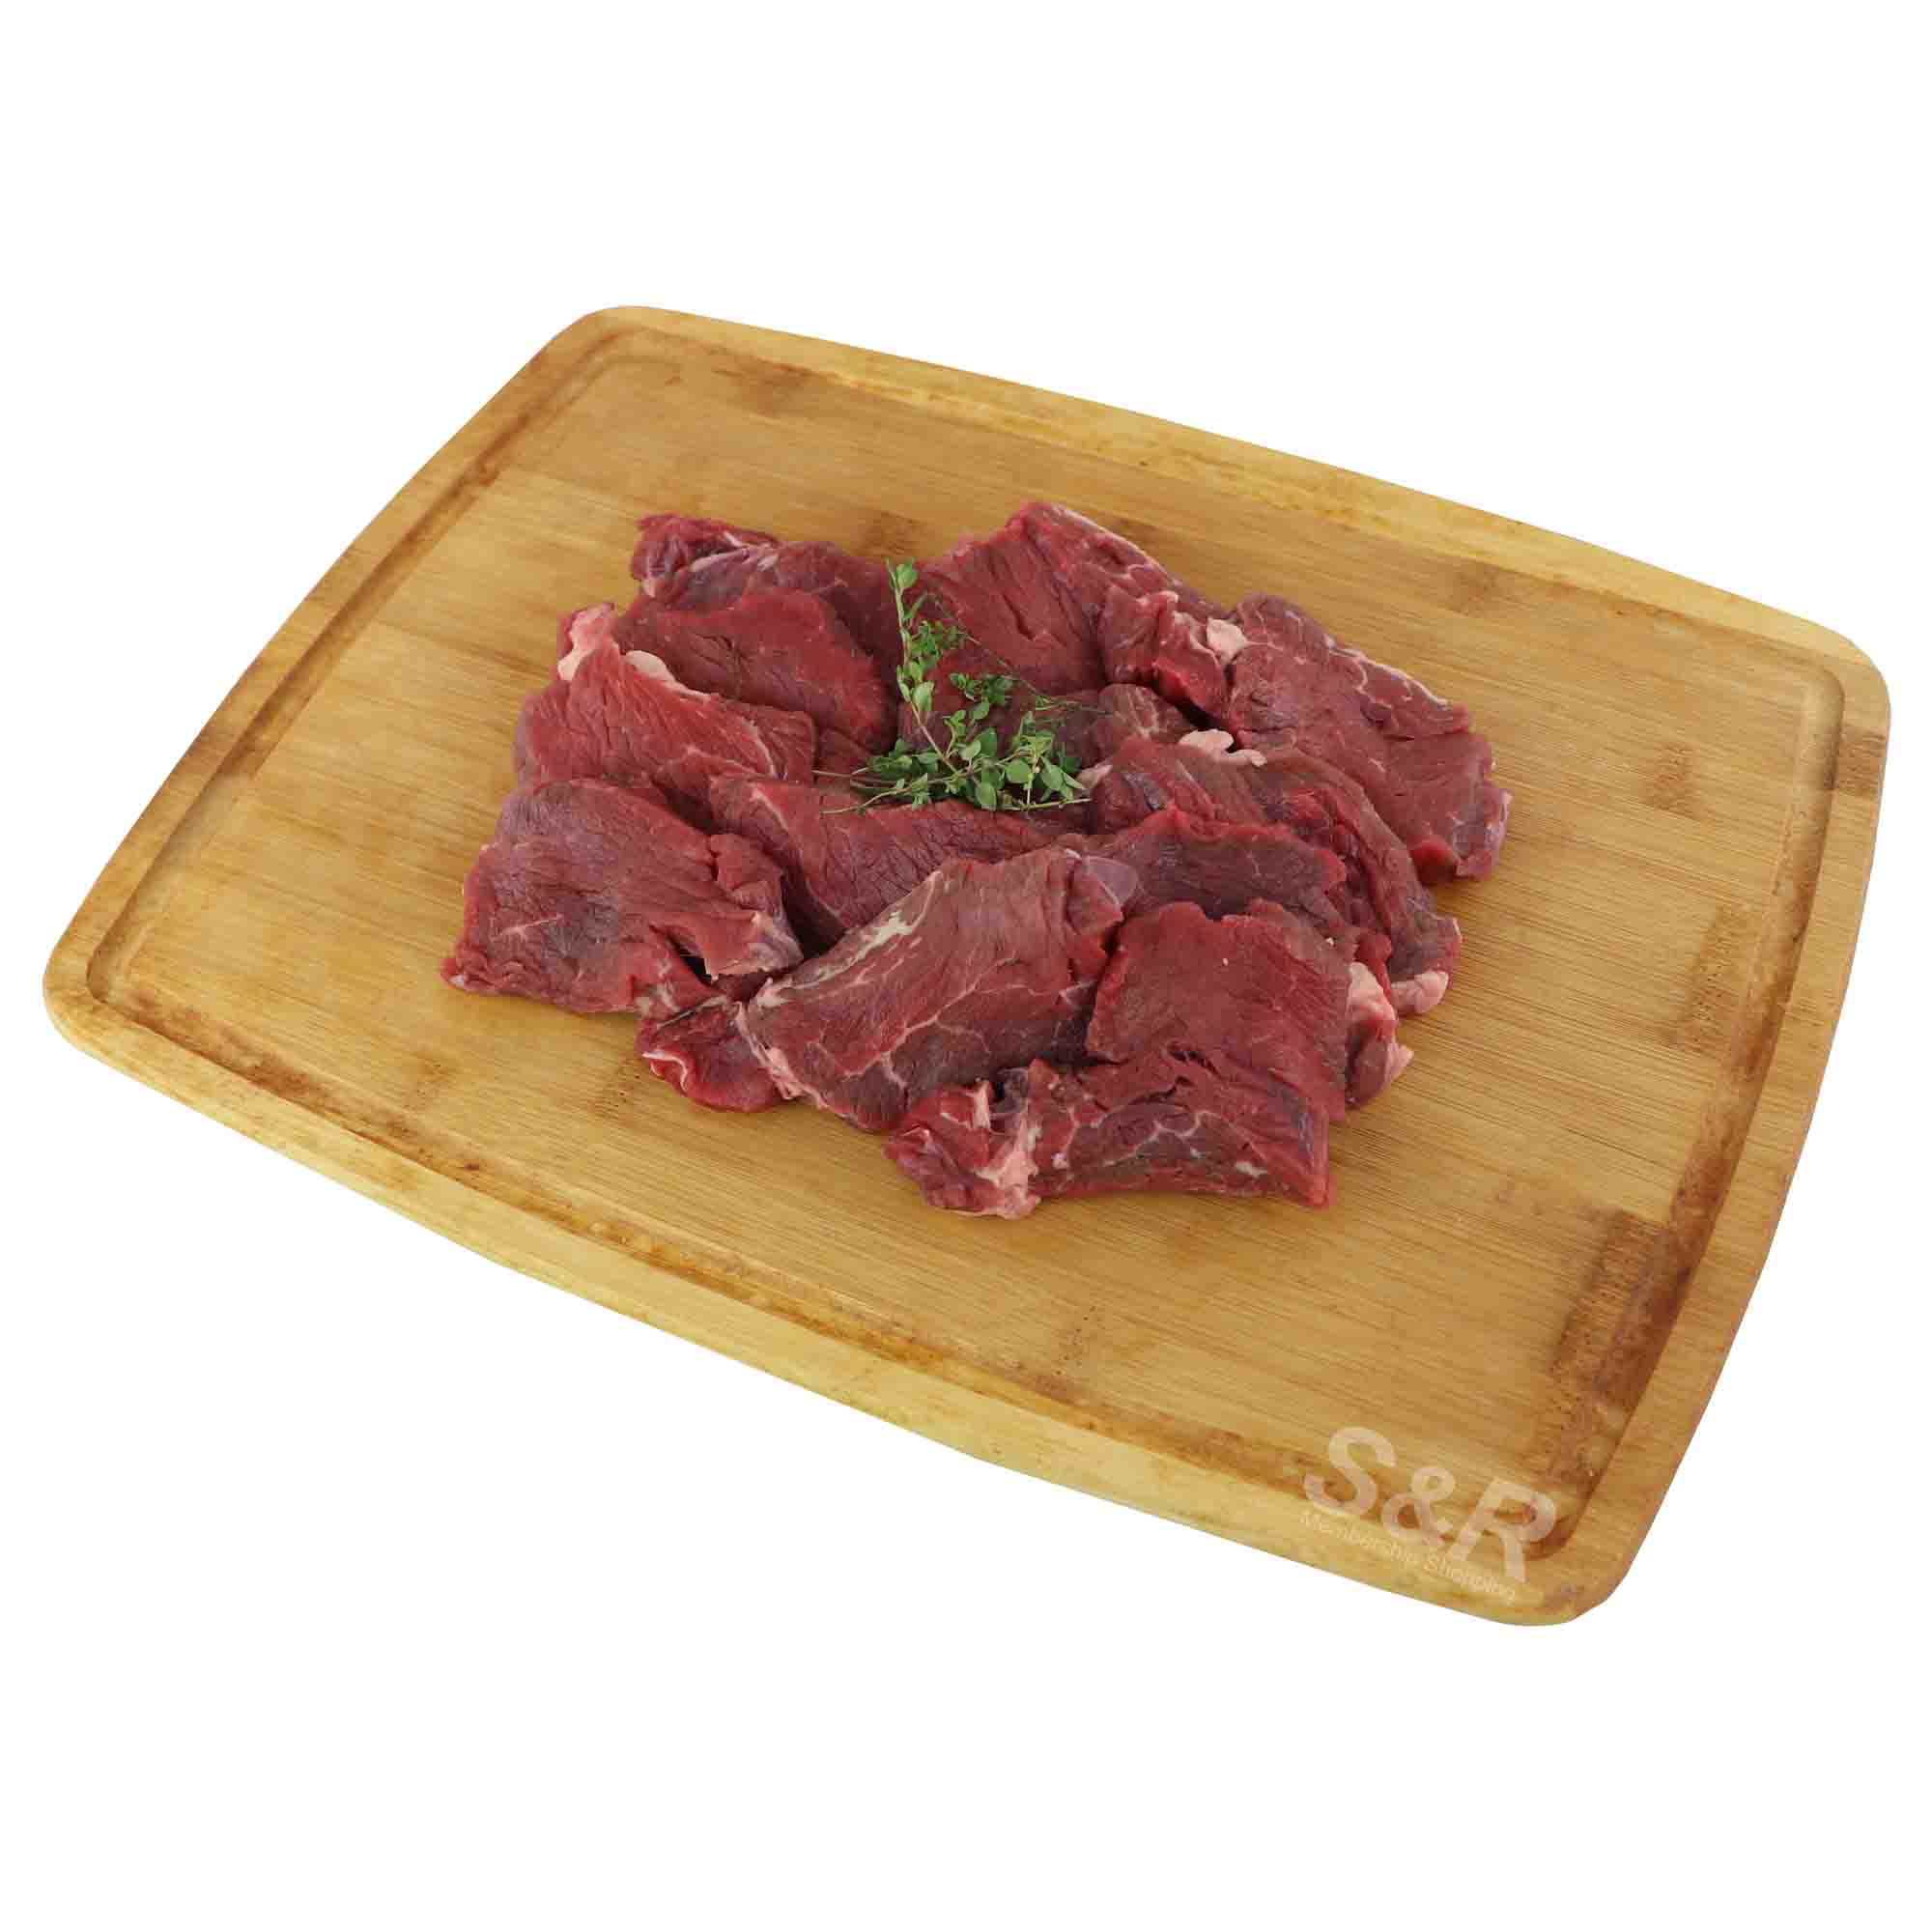 Members' Value Beef Tenderloin Steak approx. 2kg